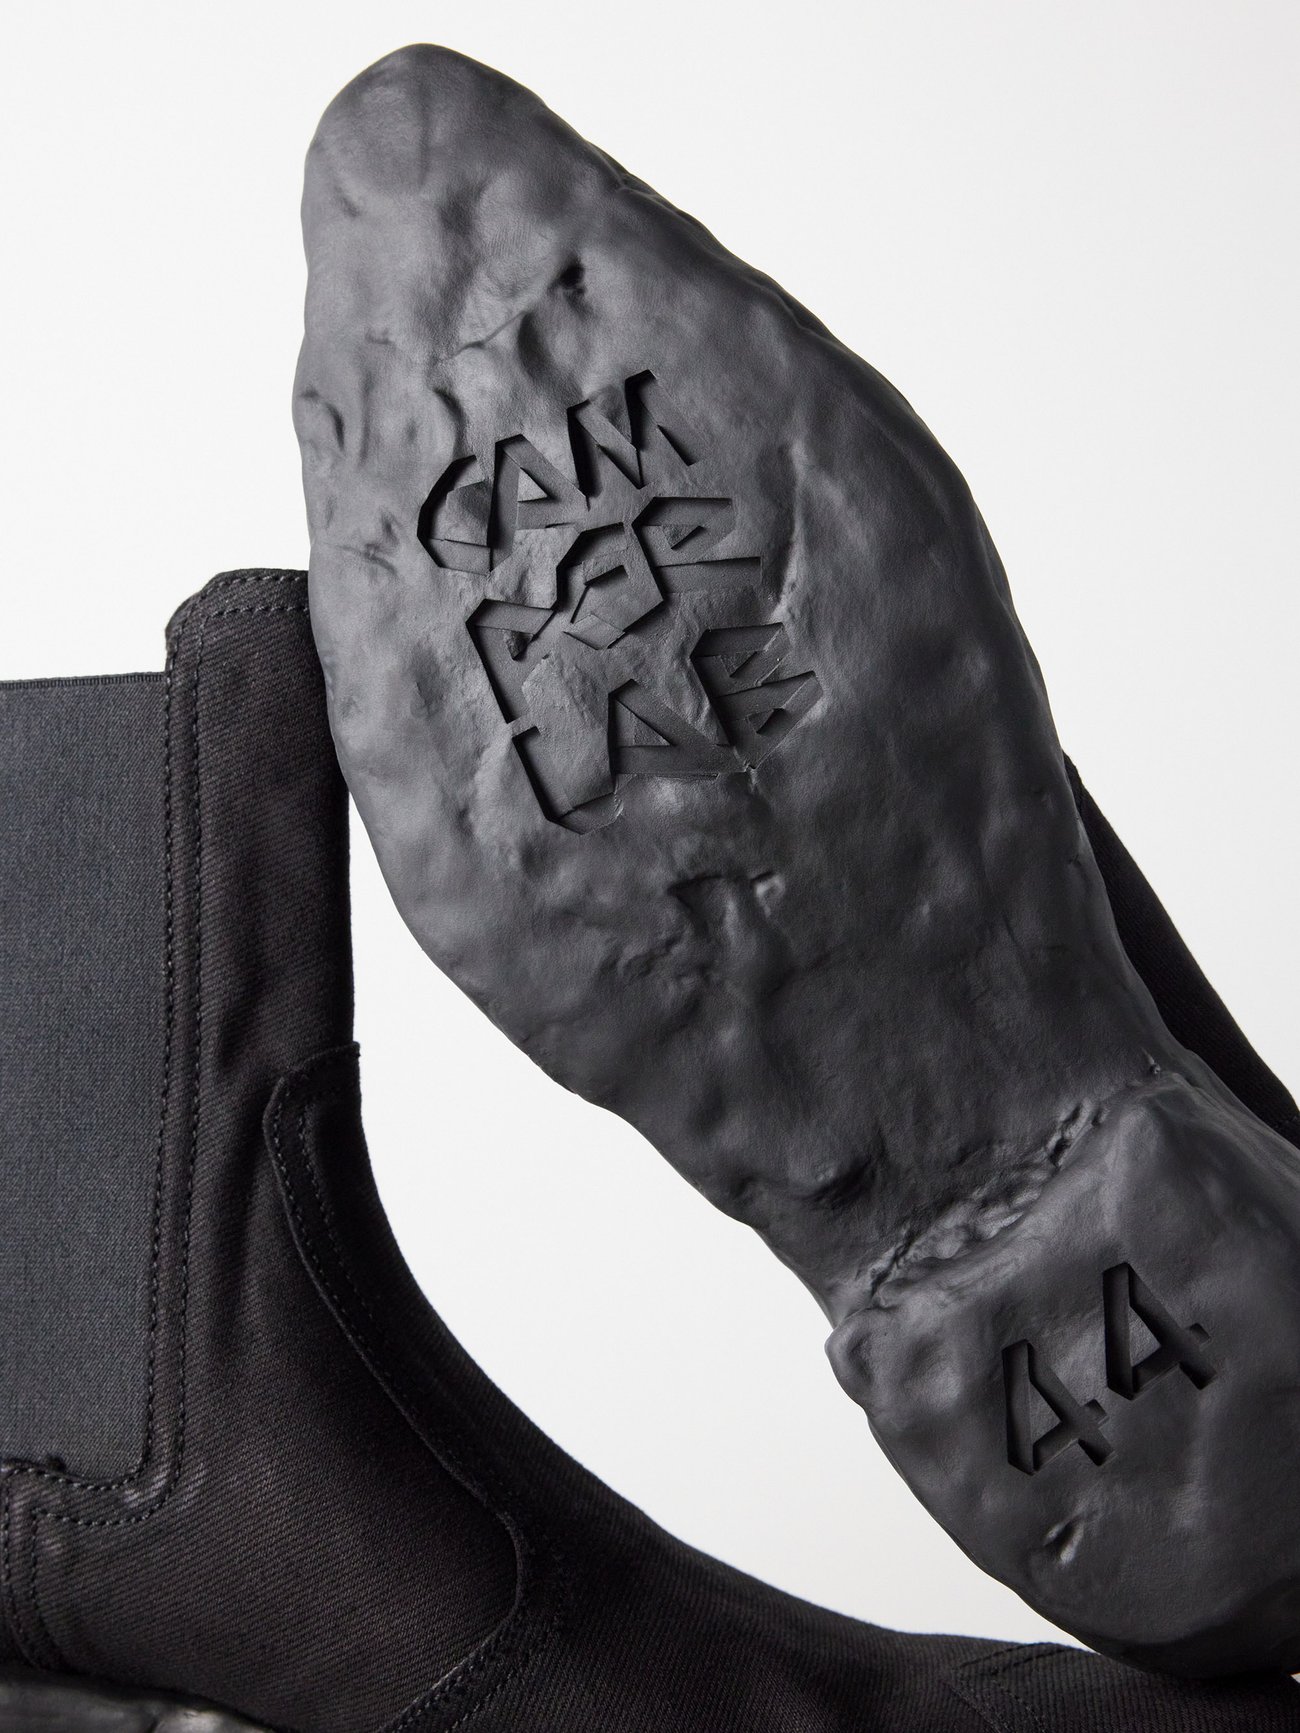 CamperLab Venga denim ankle boots - Black